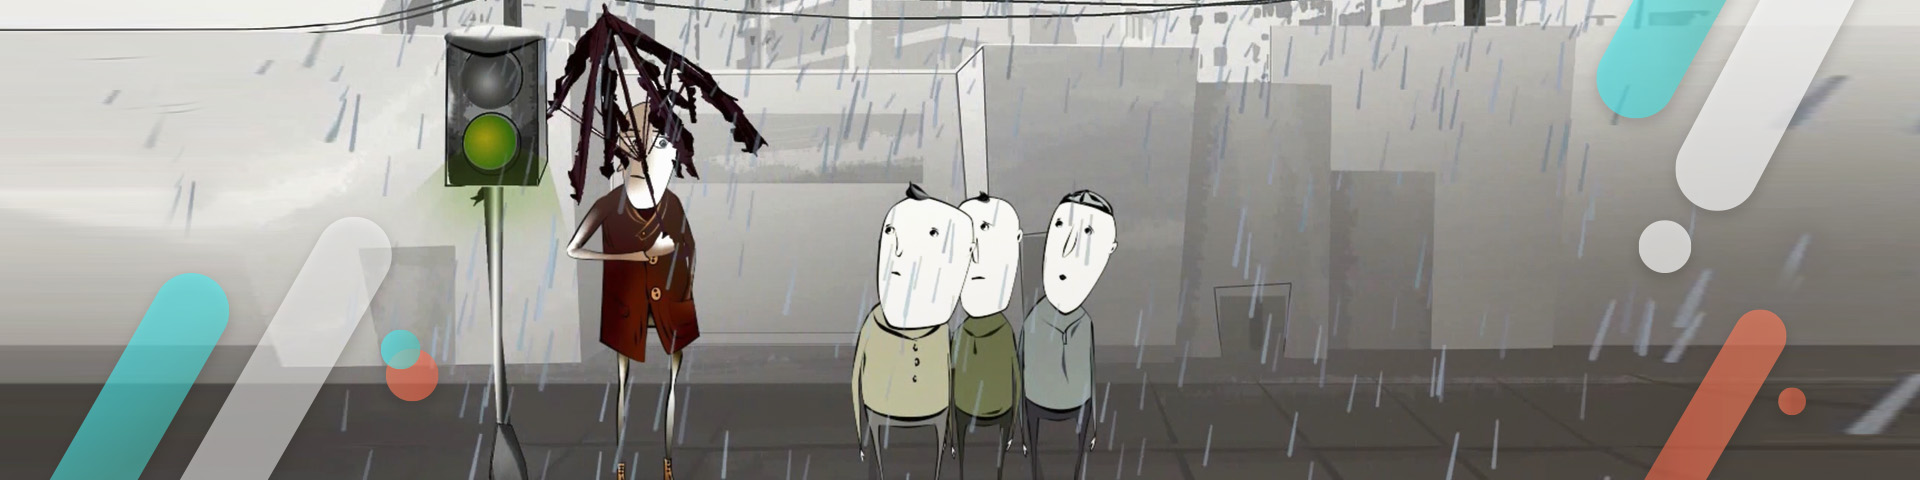 انیمیشن چتر3/ چتر سوخته